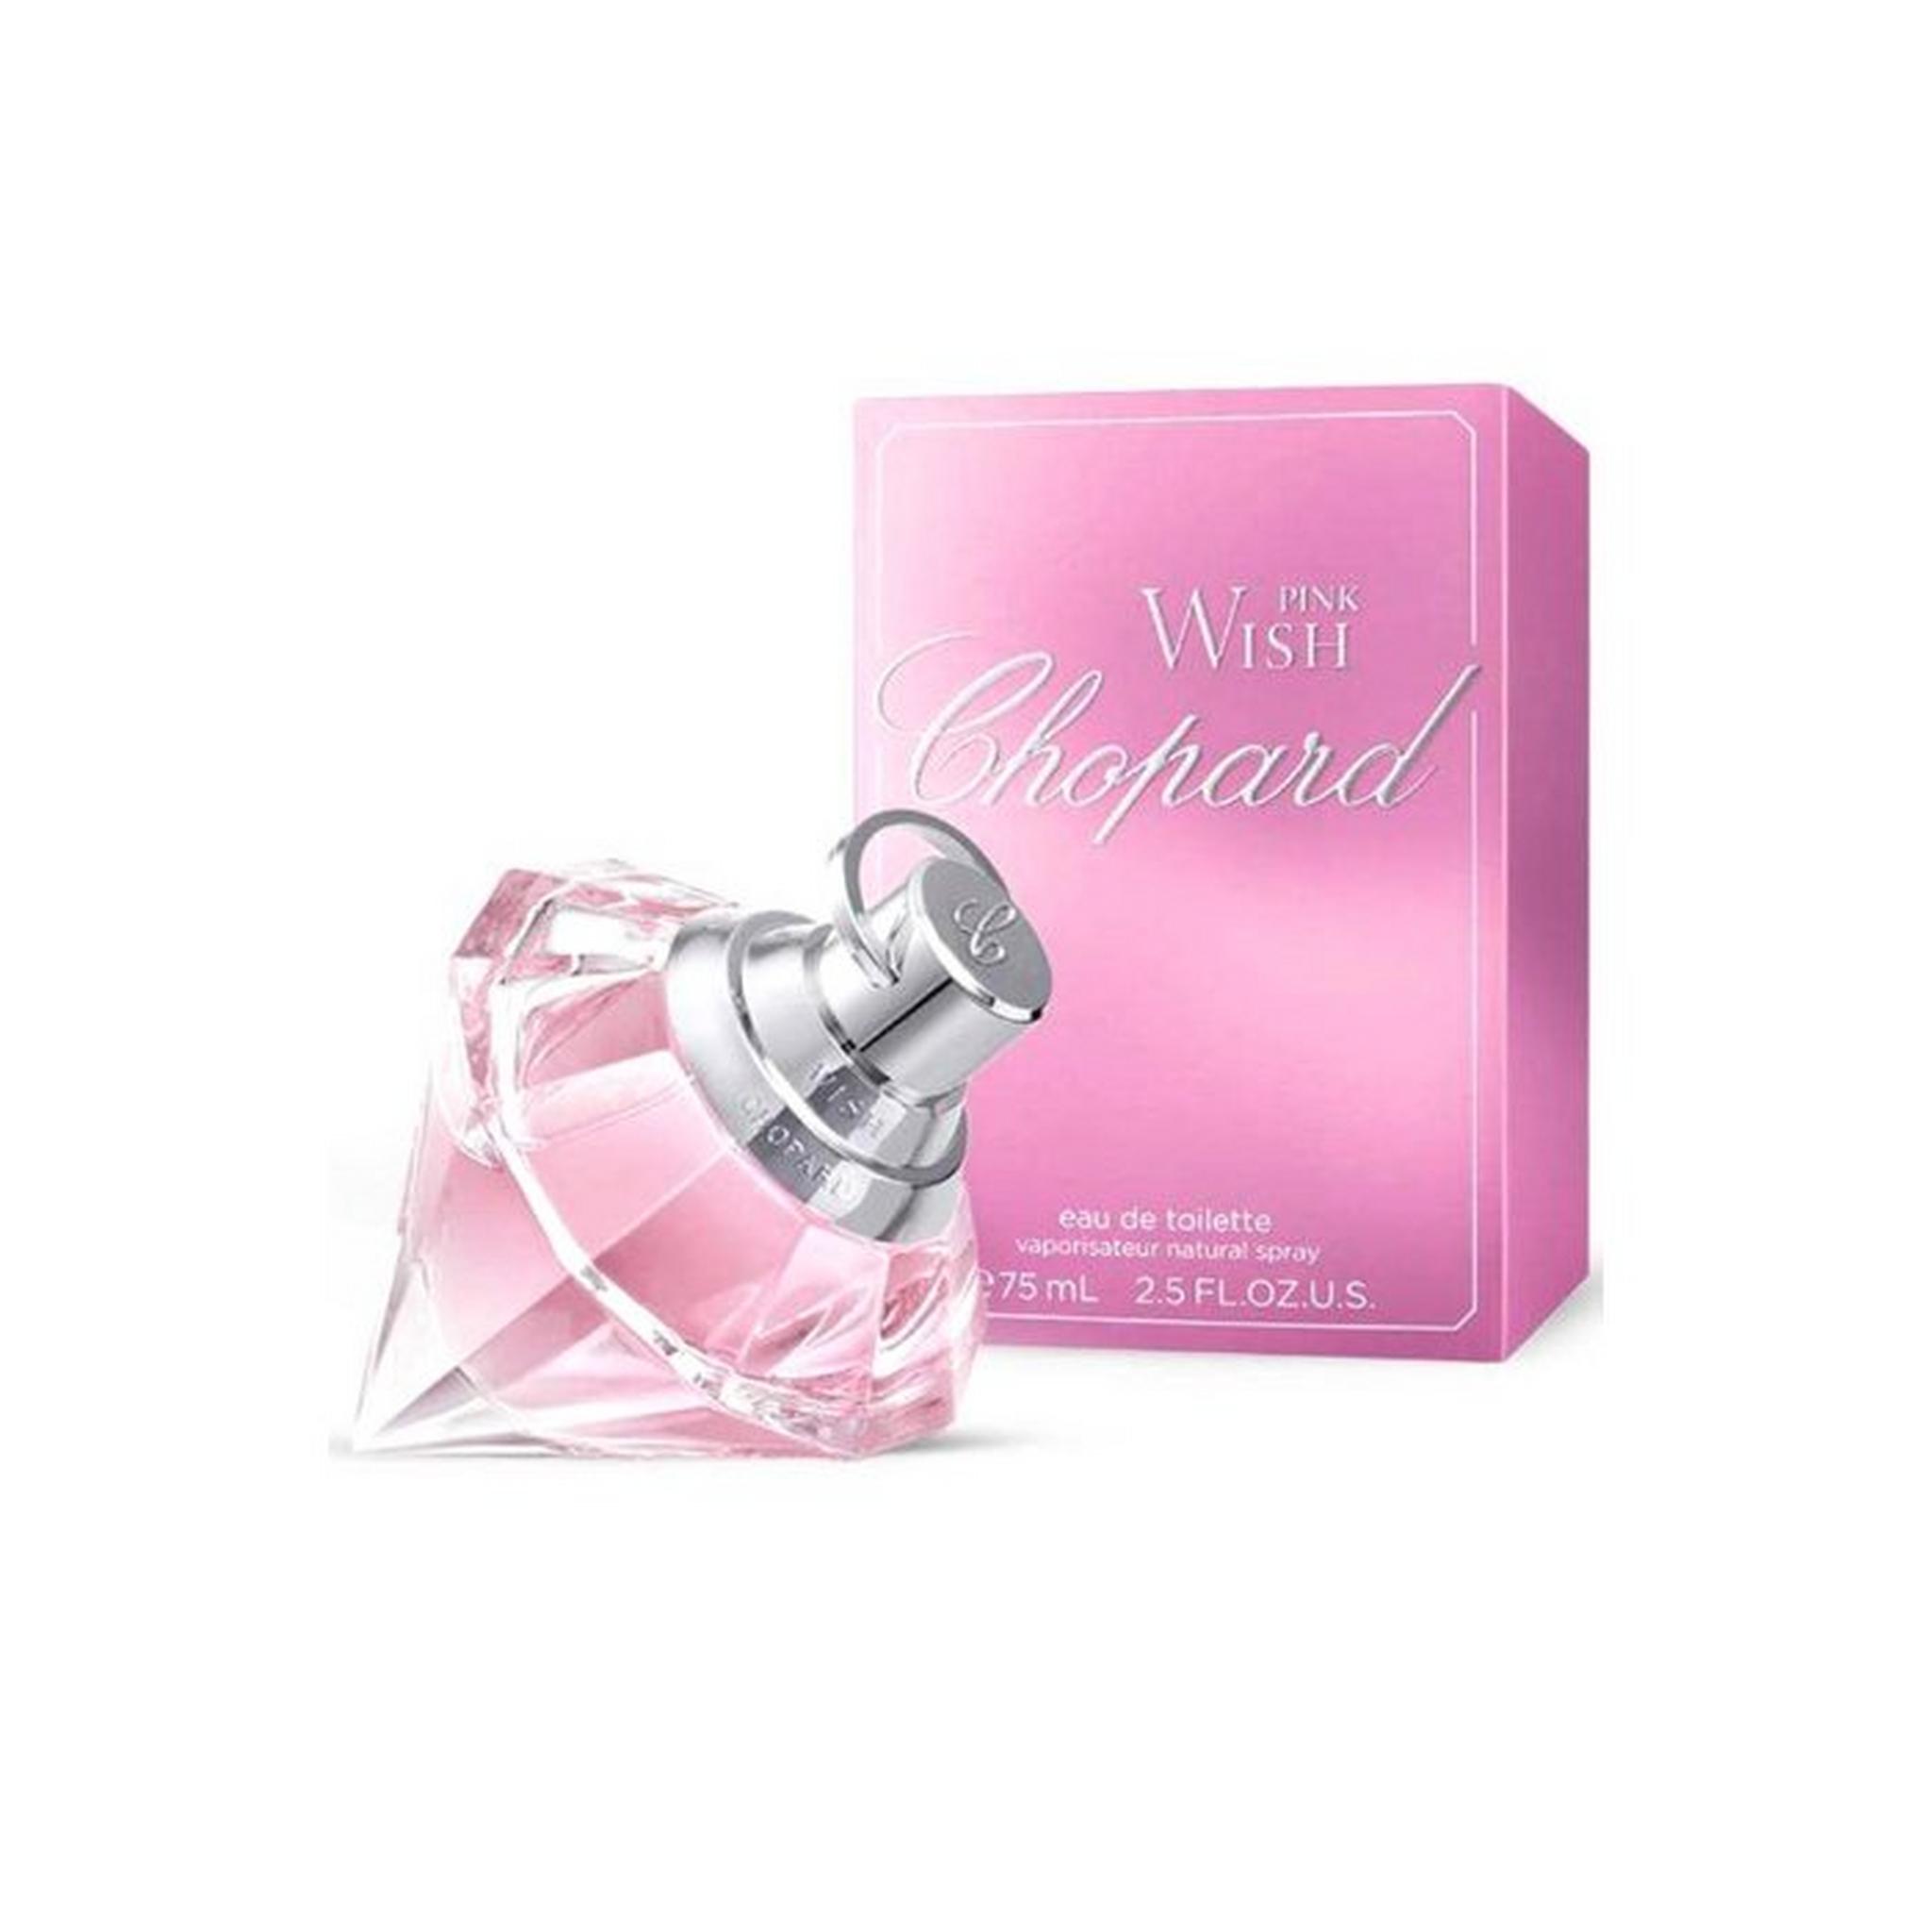 CALVIN KLEIN Beauty for Women EDP 100 ml + Chopard Pink Wish for Women EDT 75 ml